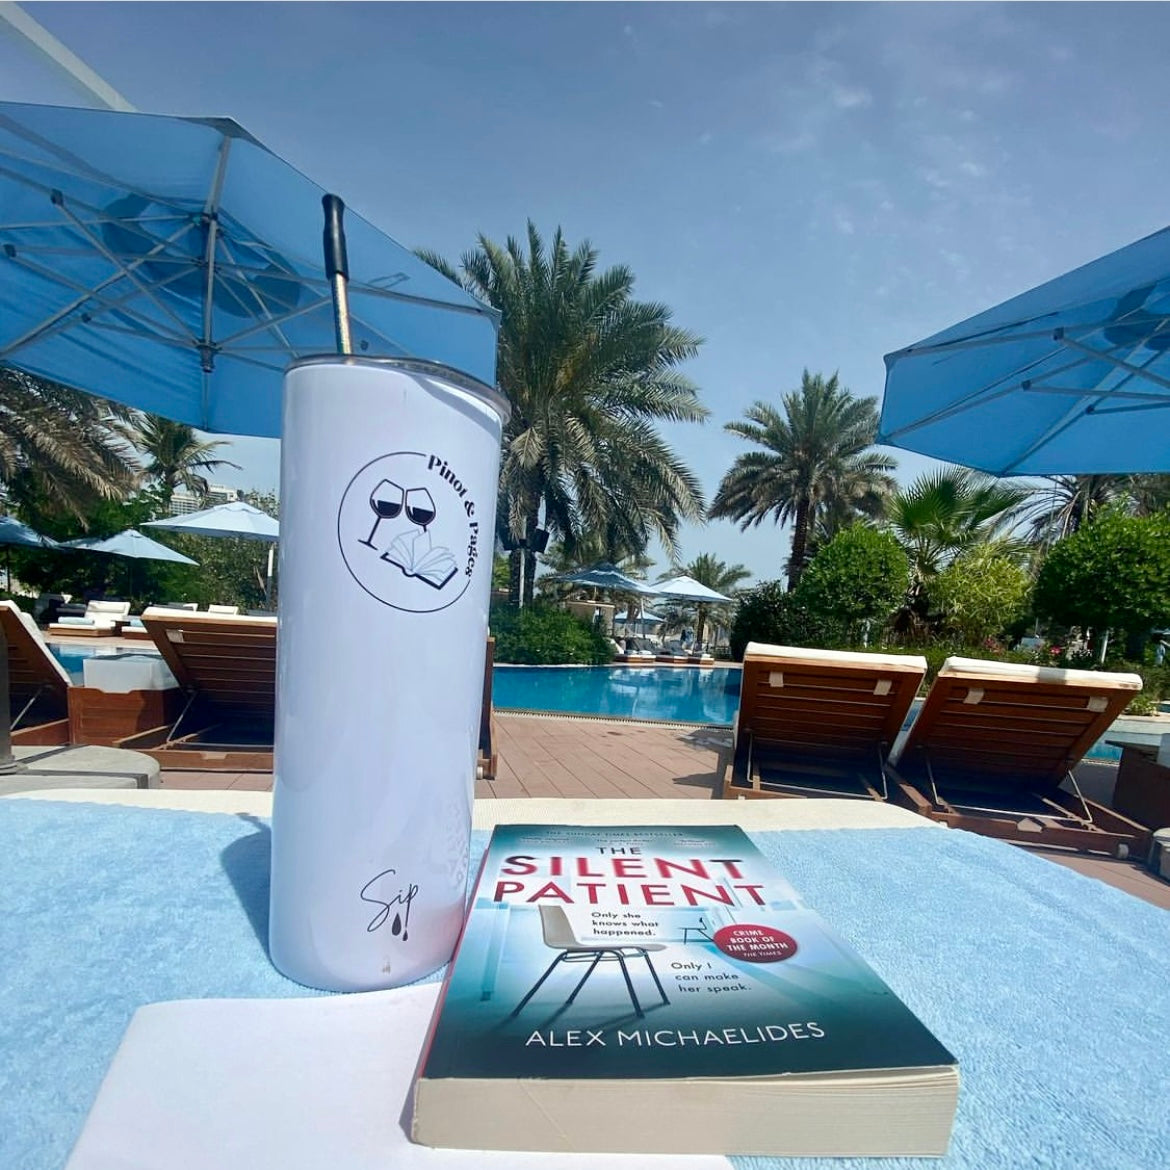 The Ultimate Dubai Book Club Experience